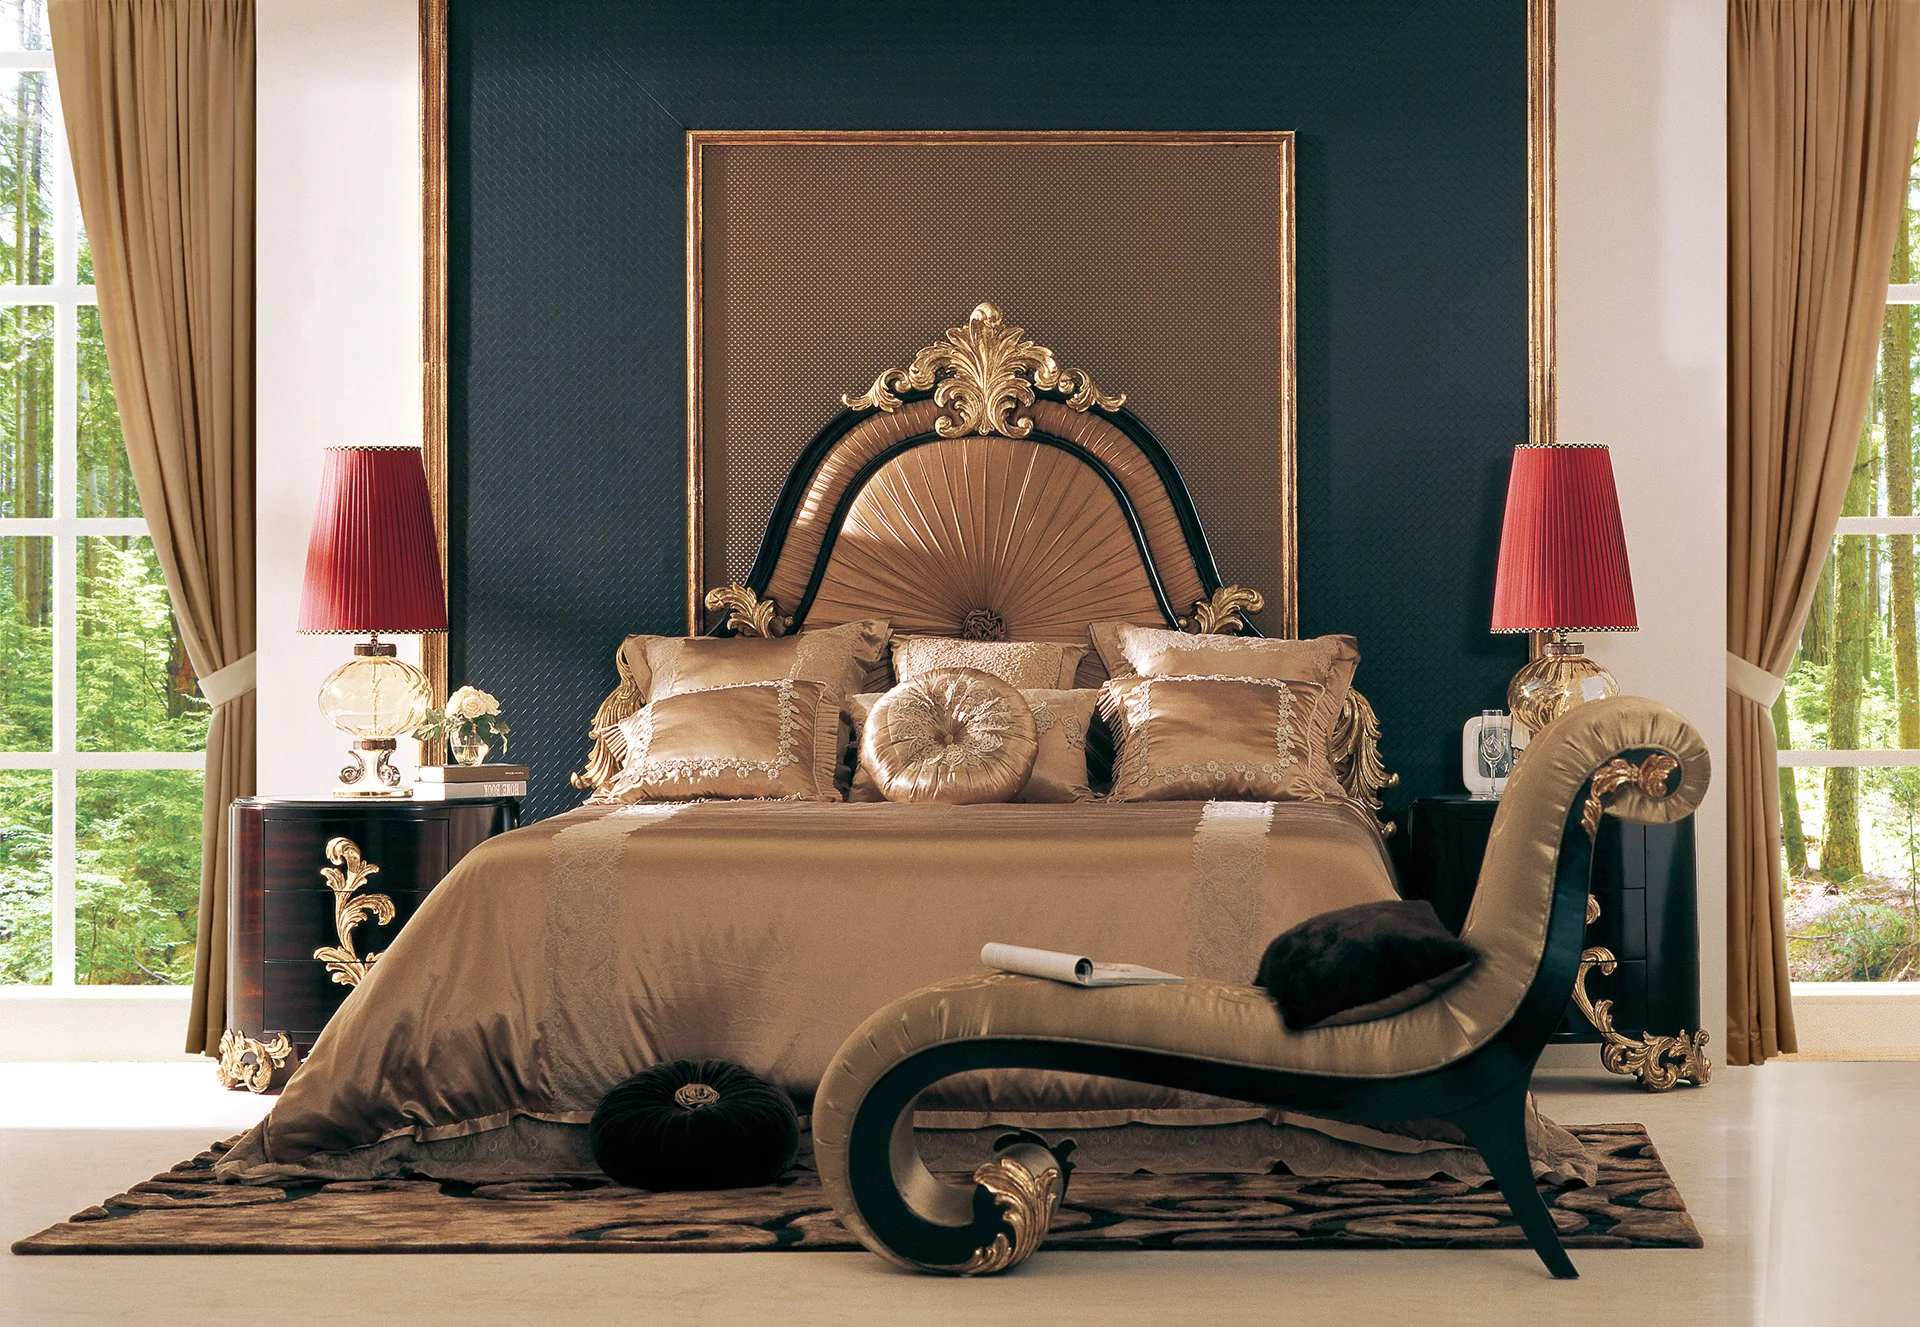 Royal Style Solid Wood Princess Bedroom Set Furniture-in